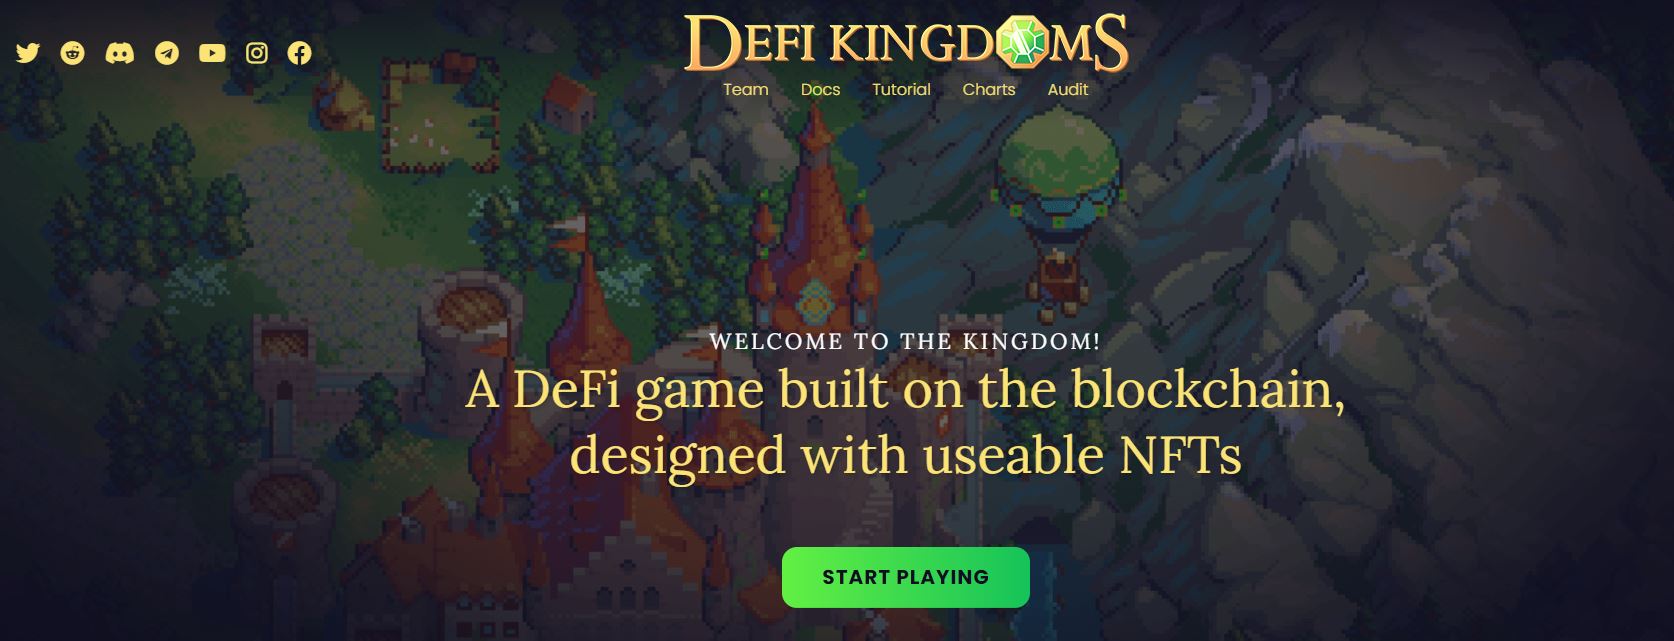 Defi Kingdoms là gì?